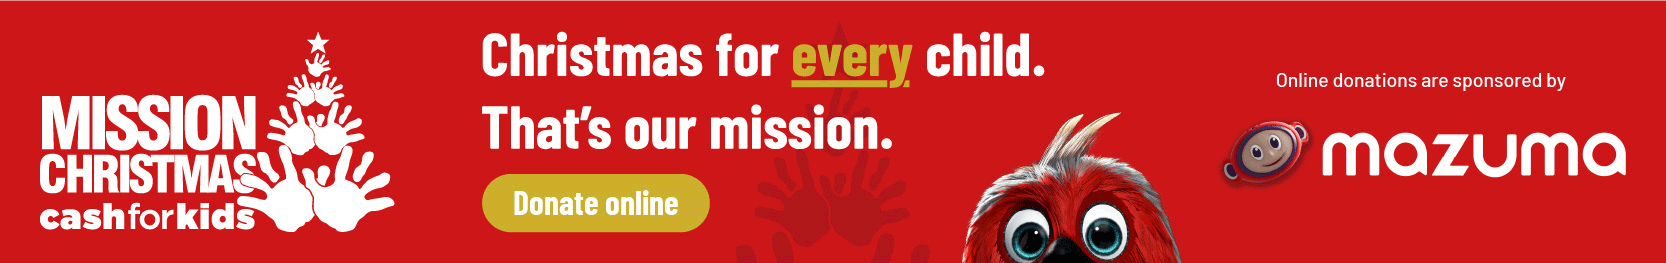 Mission Christmas - Cash for Kids Banner